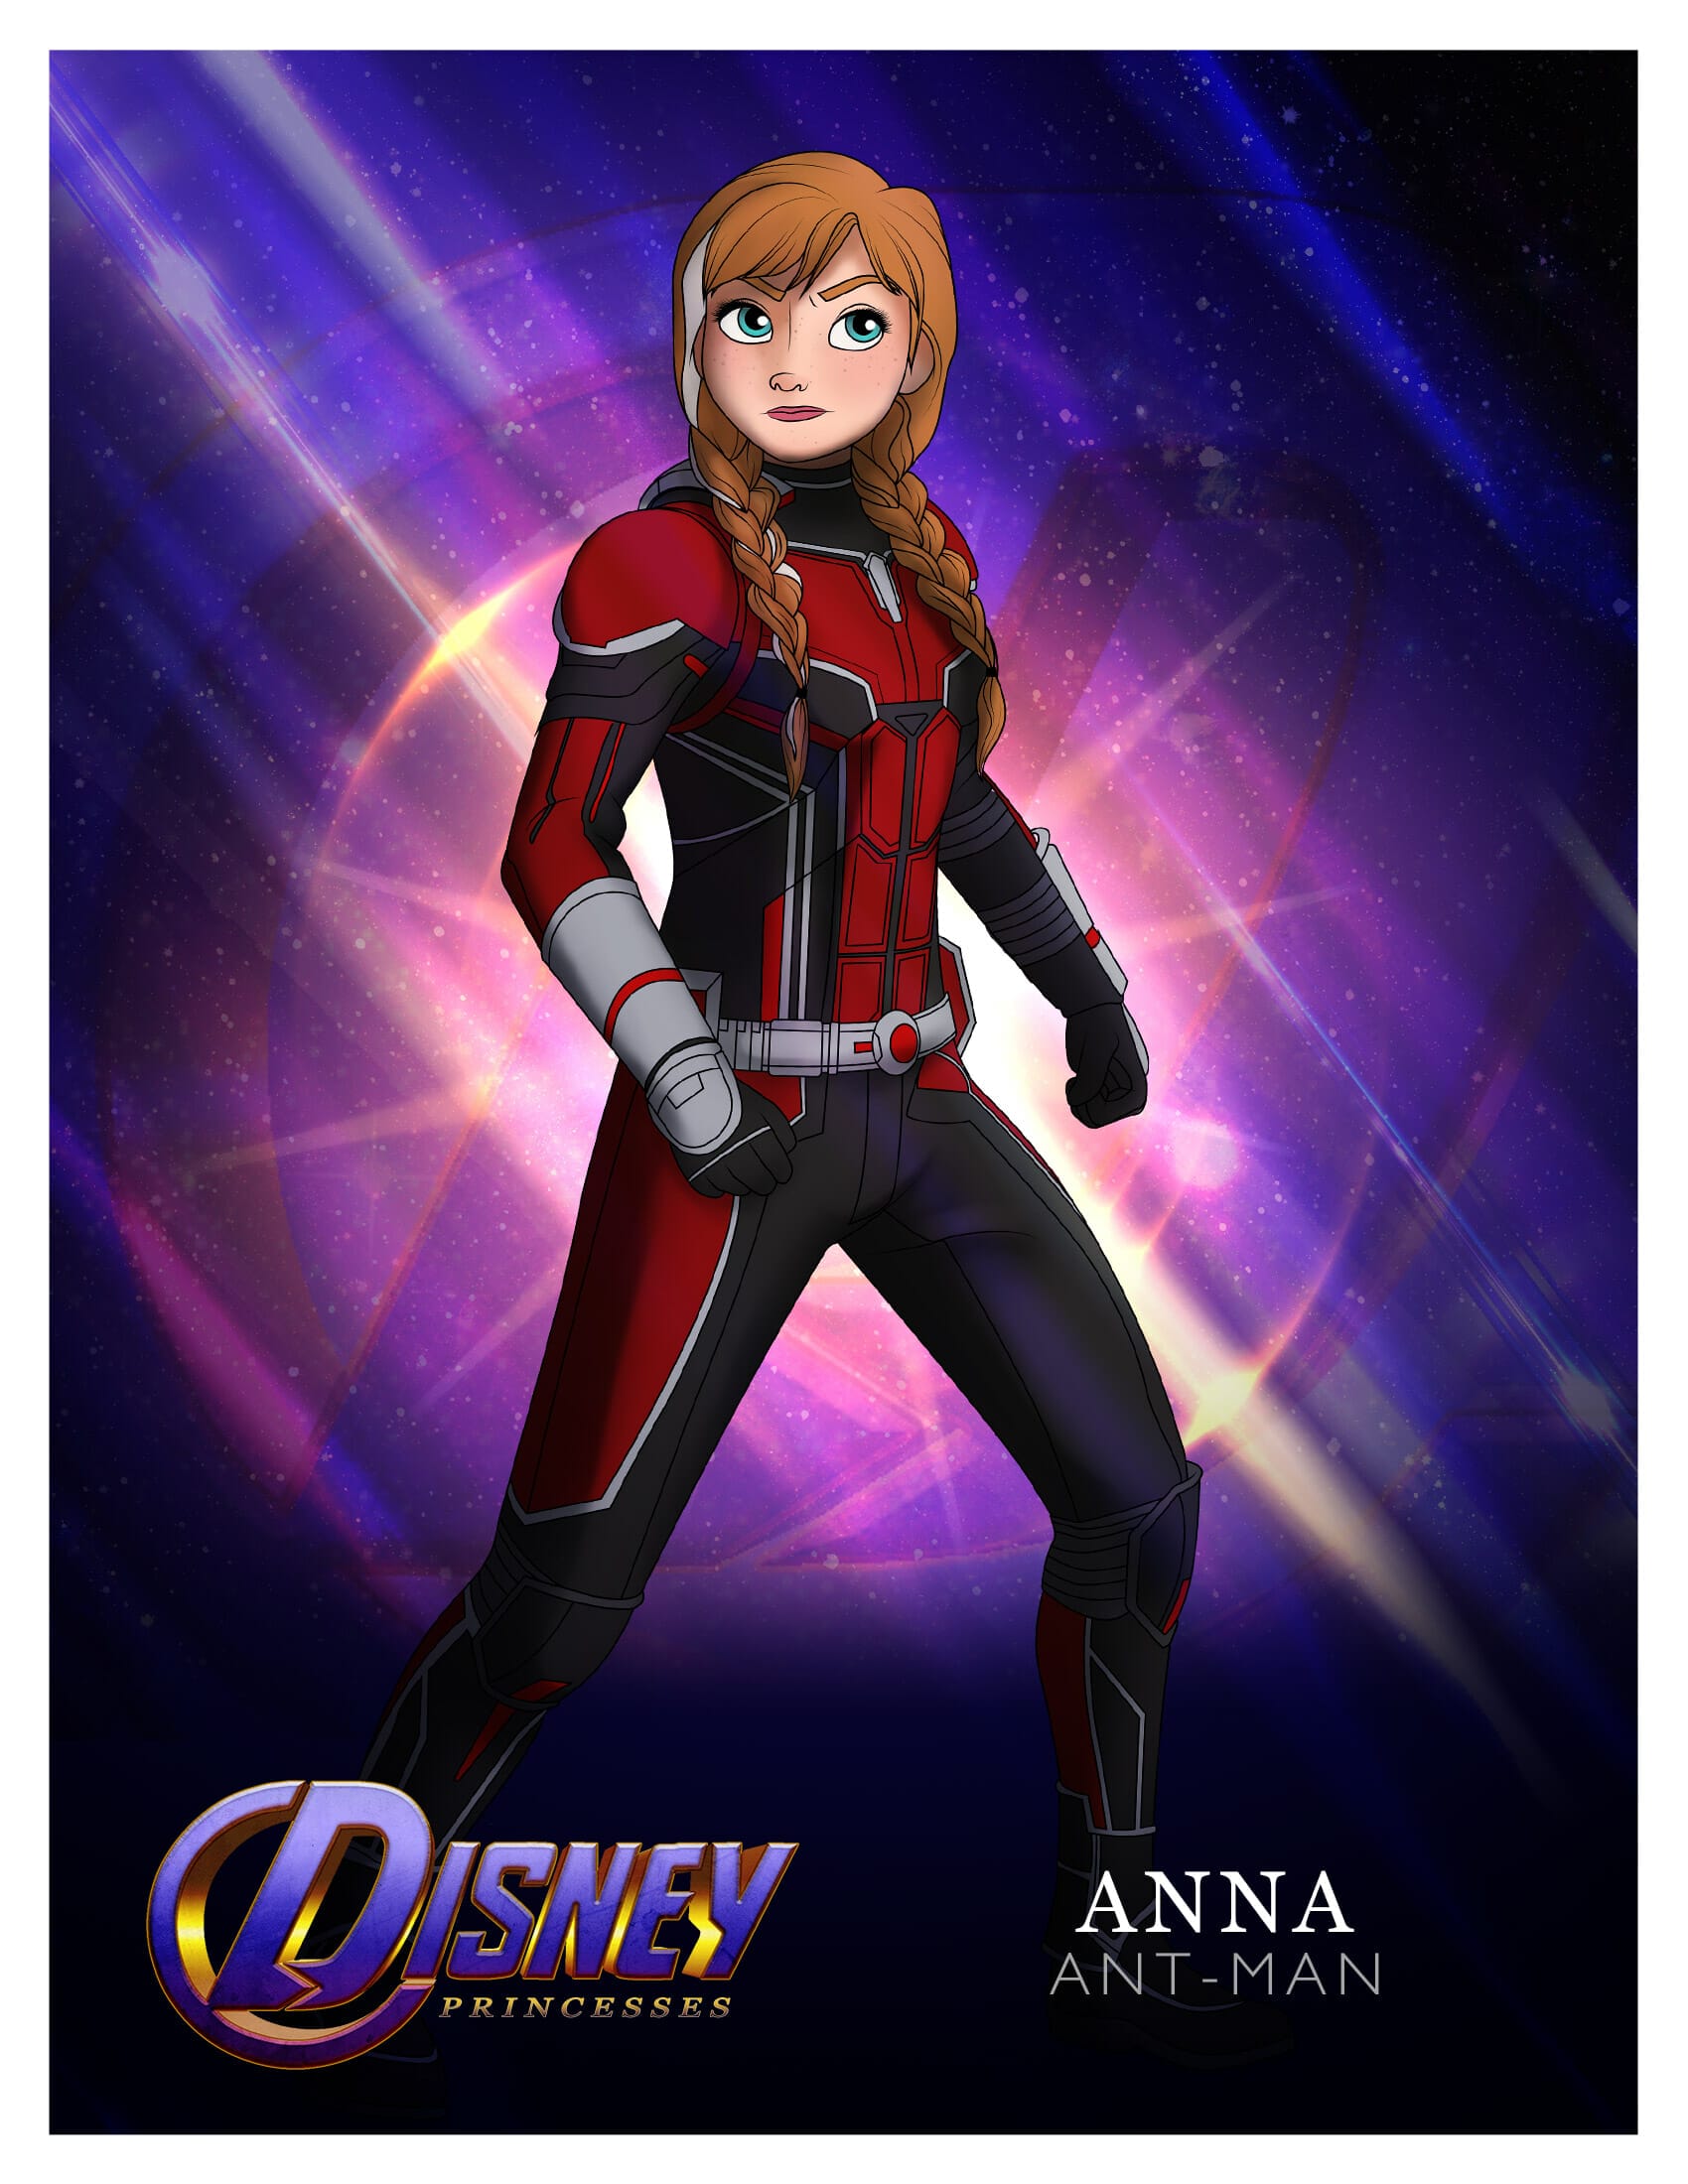 Princess Anna as Ant-man